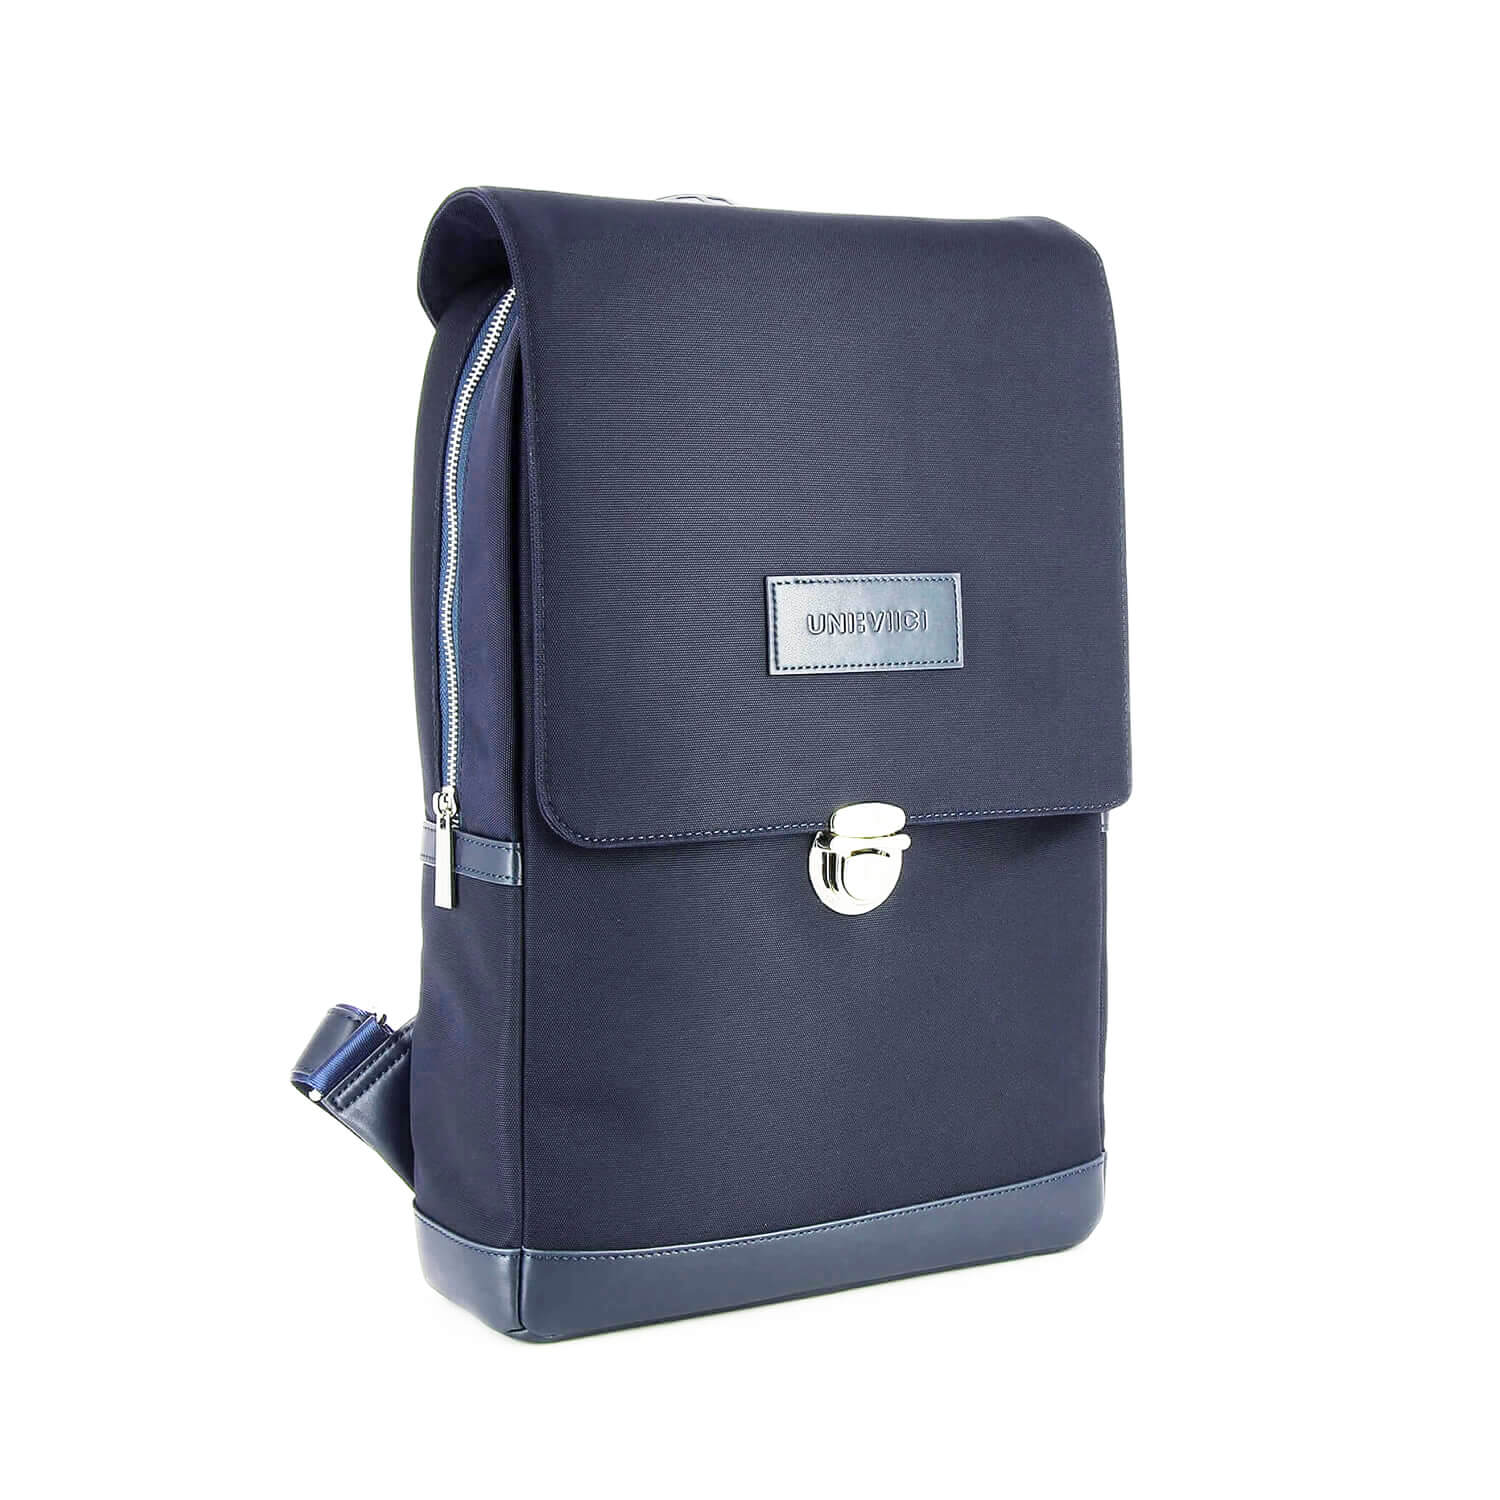 UNI:VIICI | sac à dos nylon minimaliste classe equilo bleu2 | Choisir un sac à dos minimaliste